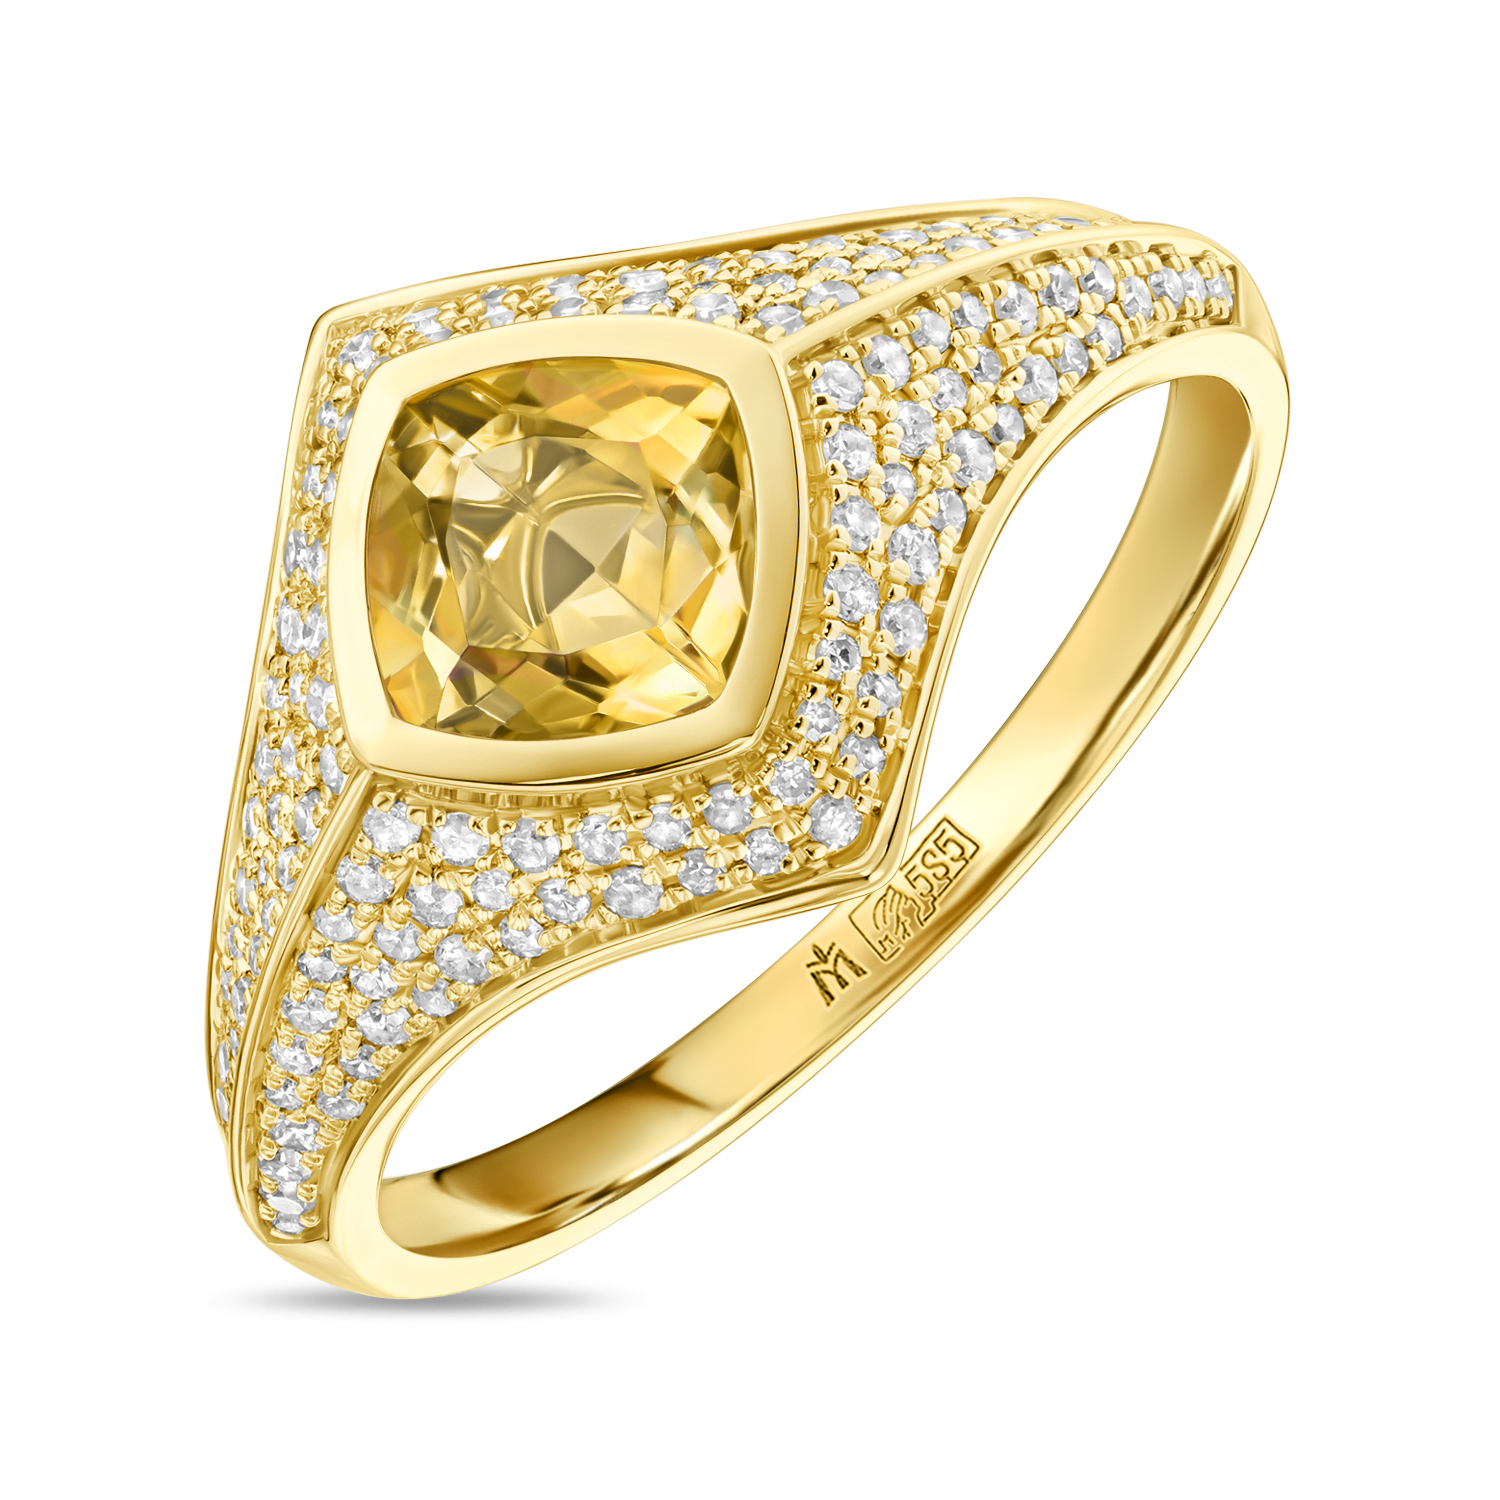 Кольца МЮЗ Кольцо с цитрином и бриллиантами кольца мюз золотое кольцо с цитрином и бриллиантами